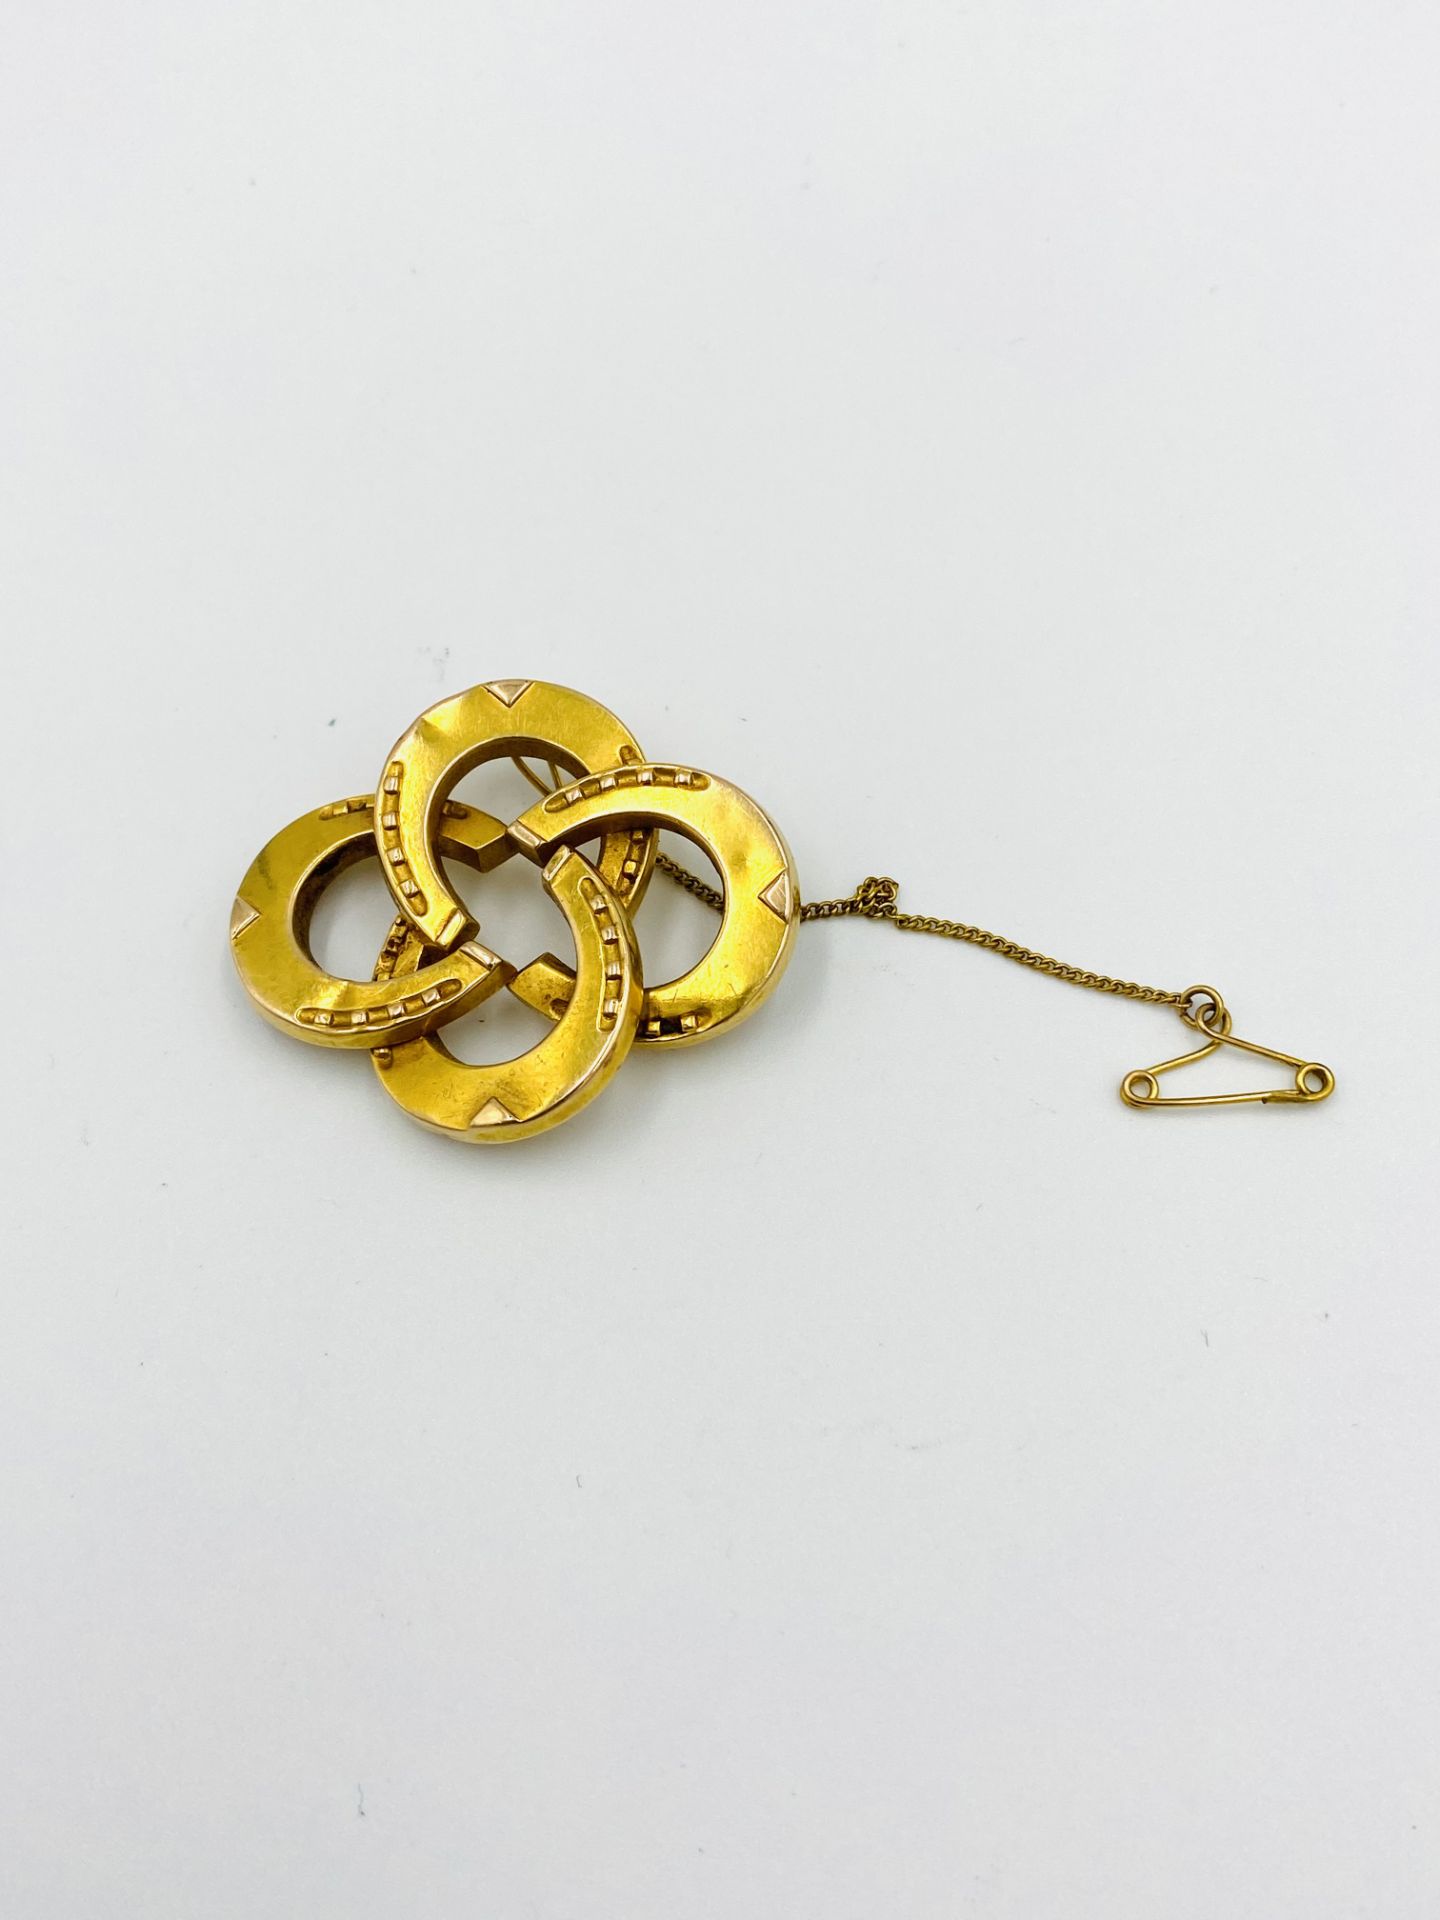 Yellow metal brooch/pendant - Image 2 of 4